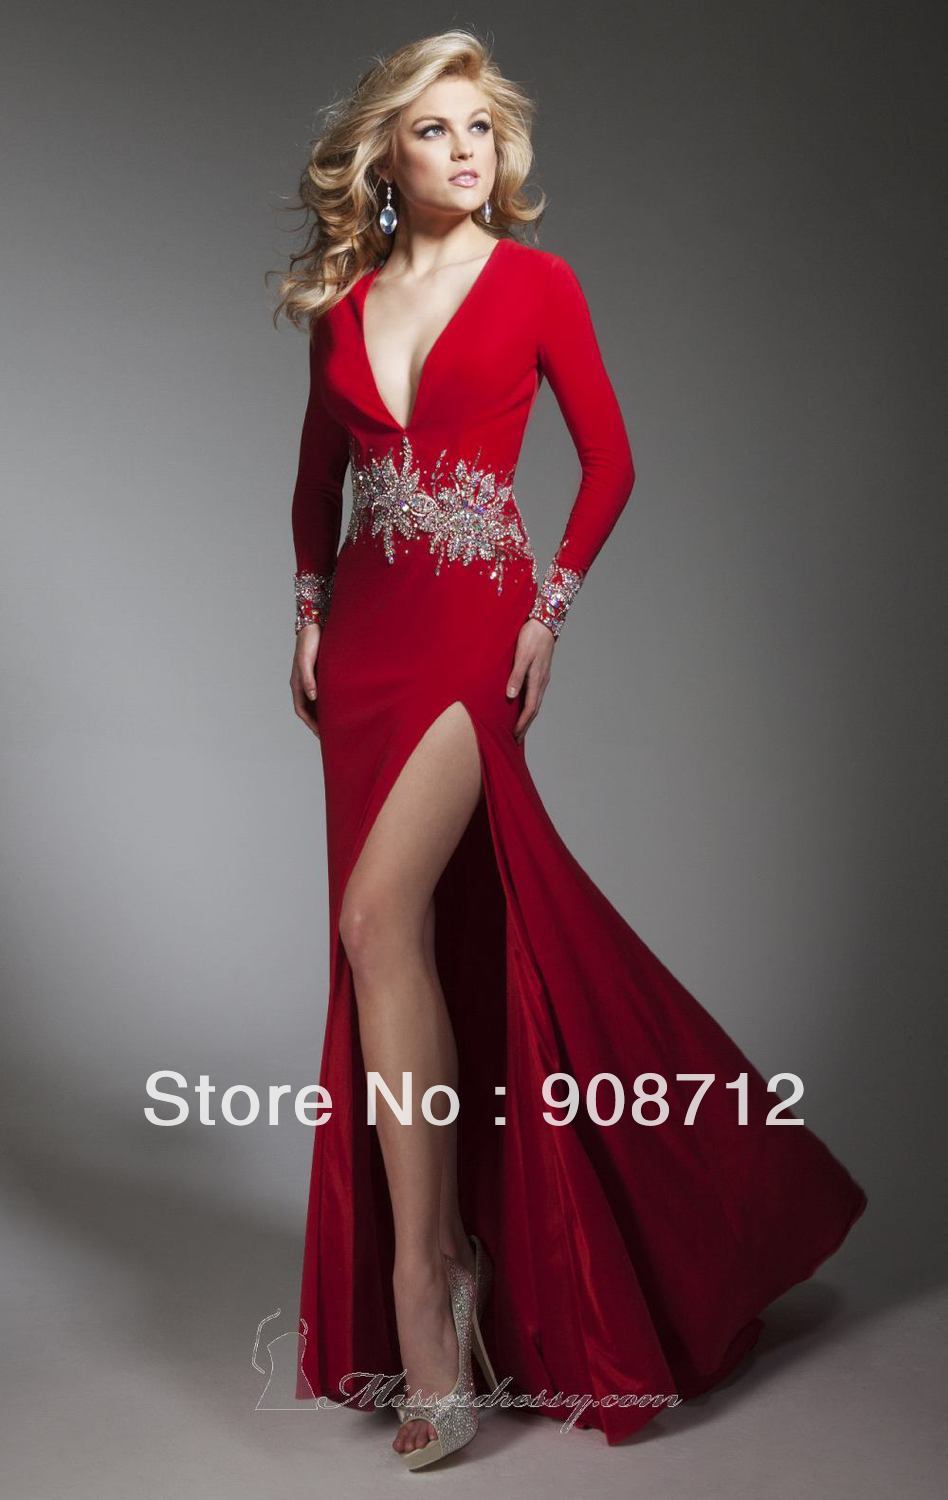 Long-Sleeve-V-neckline-Designer-Stunning-Evening-Gown-Red-Carpet-Dress ...